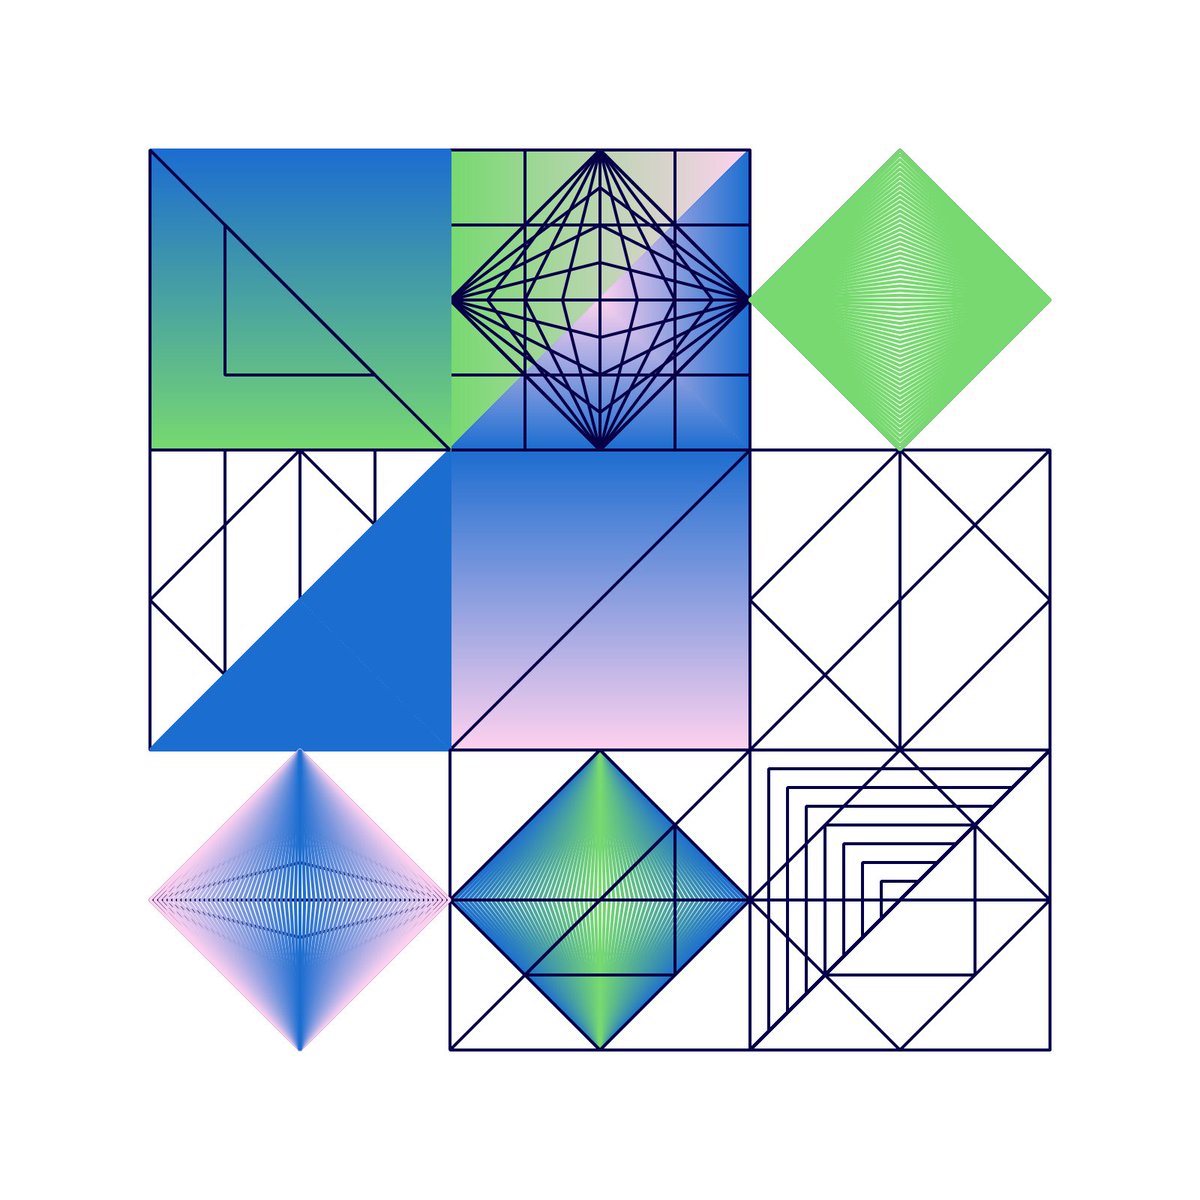 Geometric Shapes / 240509
#p5js 
#generative 
#creativecoding